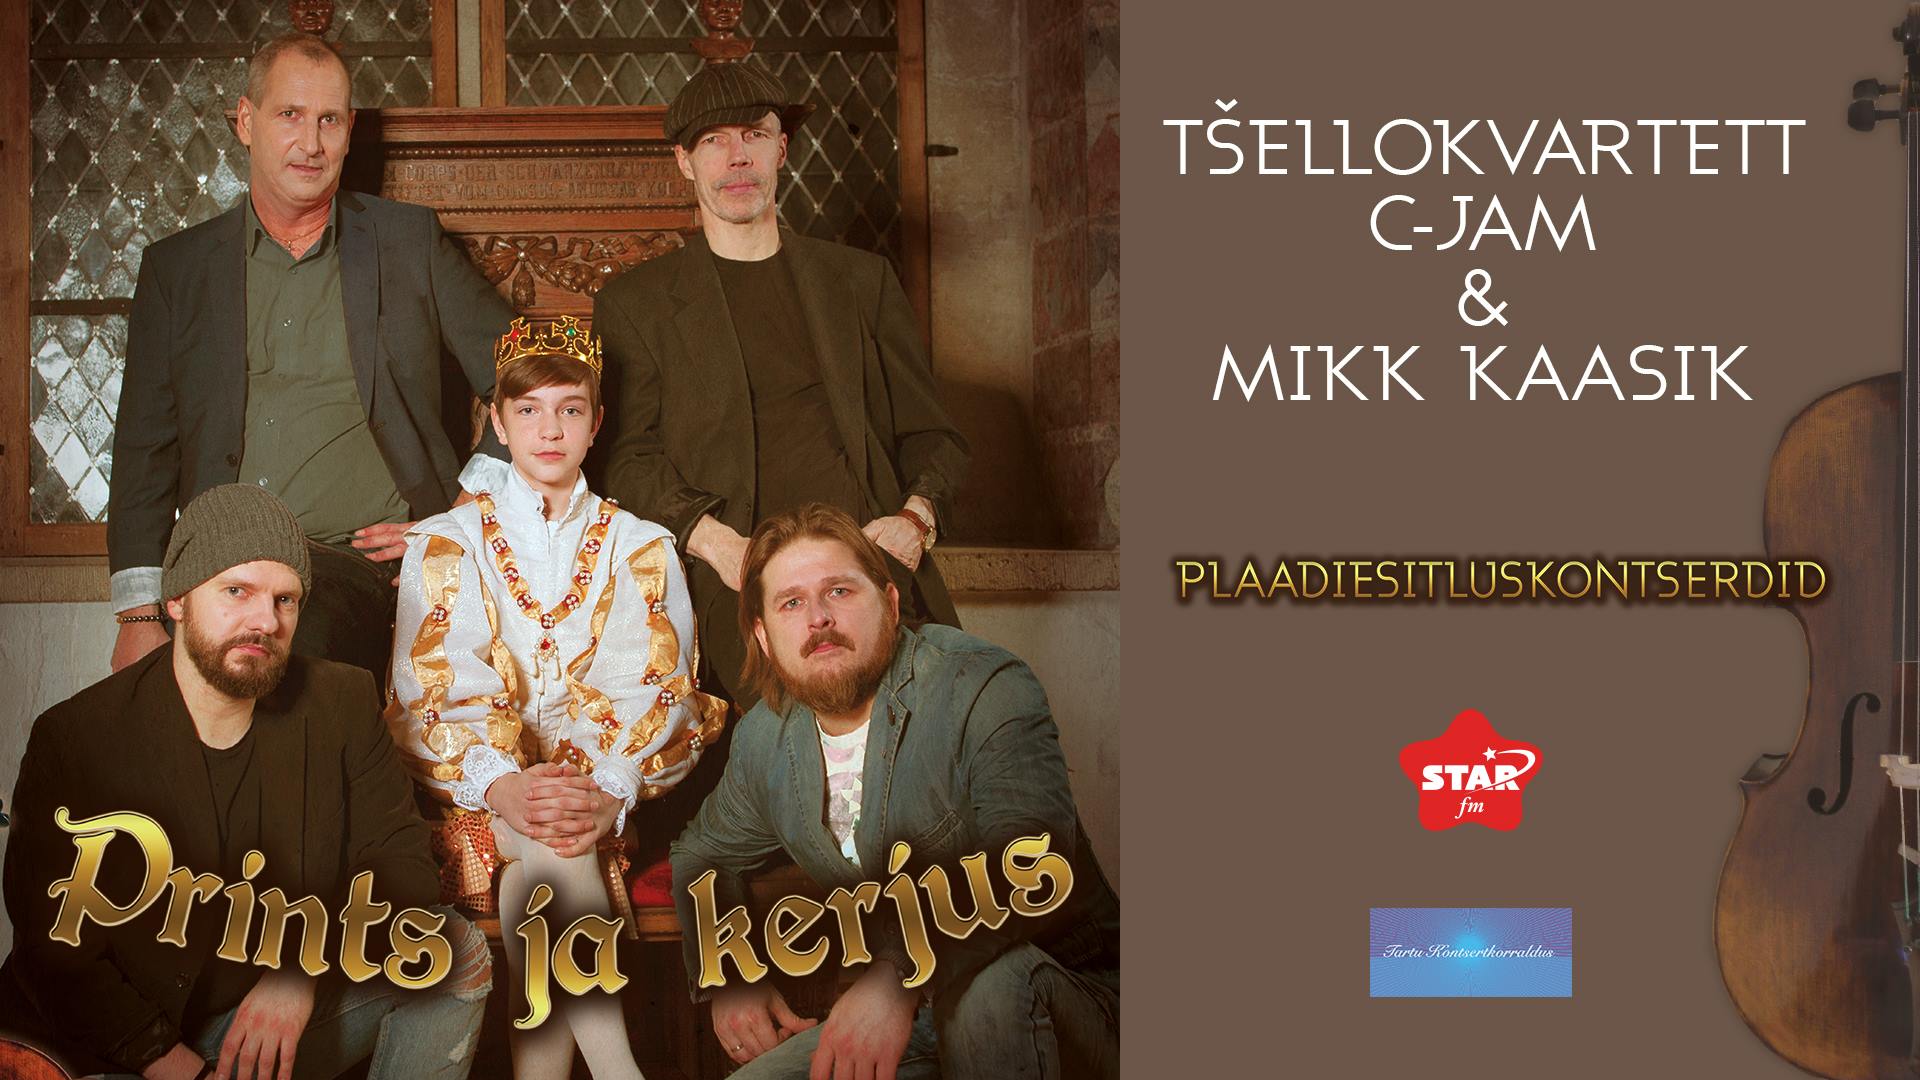 7387Mikk Kaasik and C-JAM present their album ‘Prints ja kerjus’ (‘The Prince and the Pauper’)